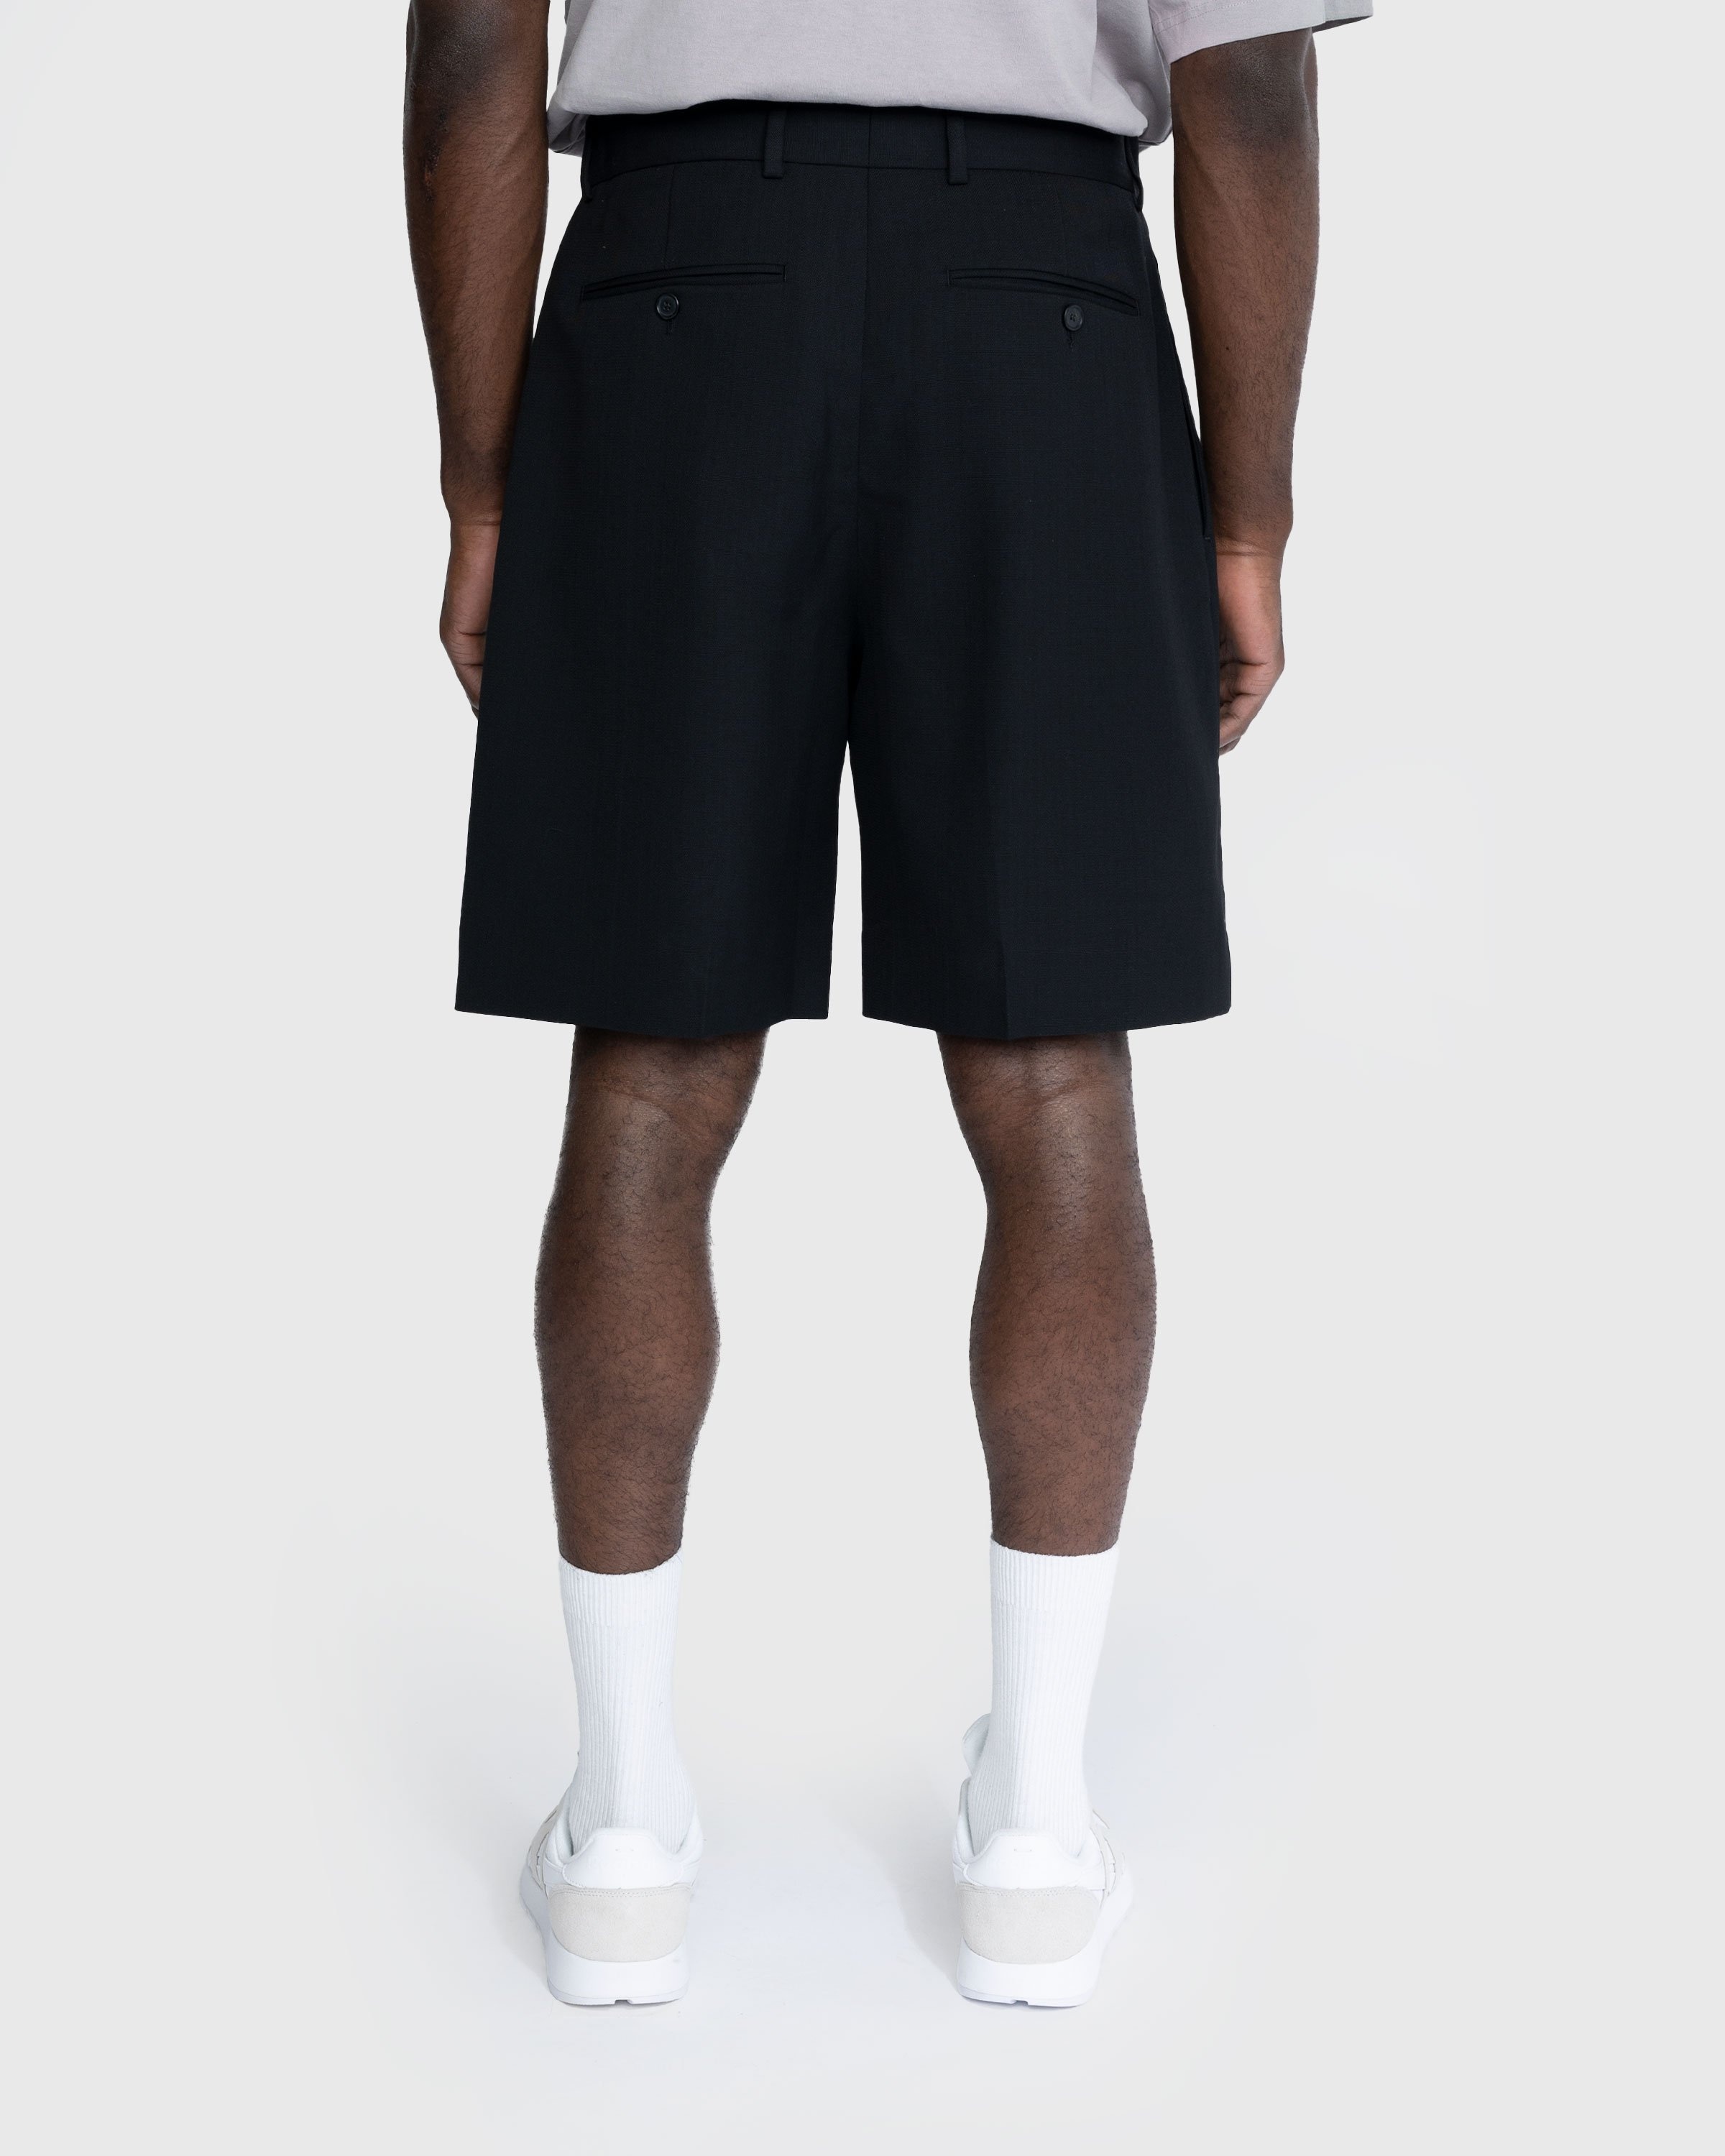 Acne Studios – Tailored Pleated Shorts Black - Shorts - Black - Image 3